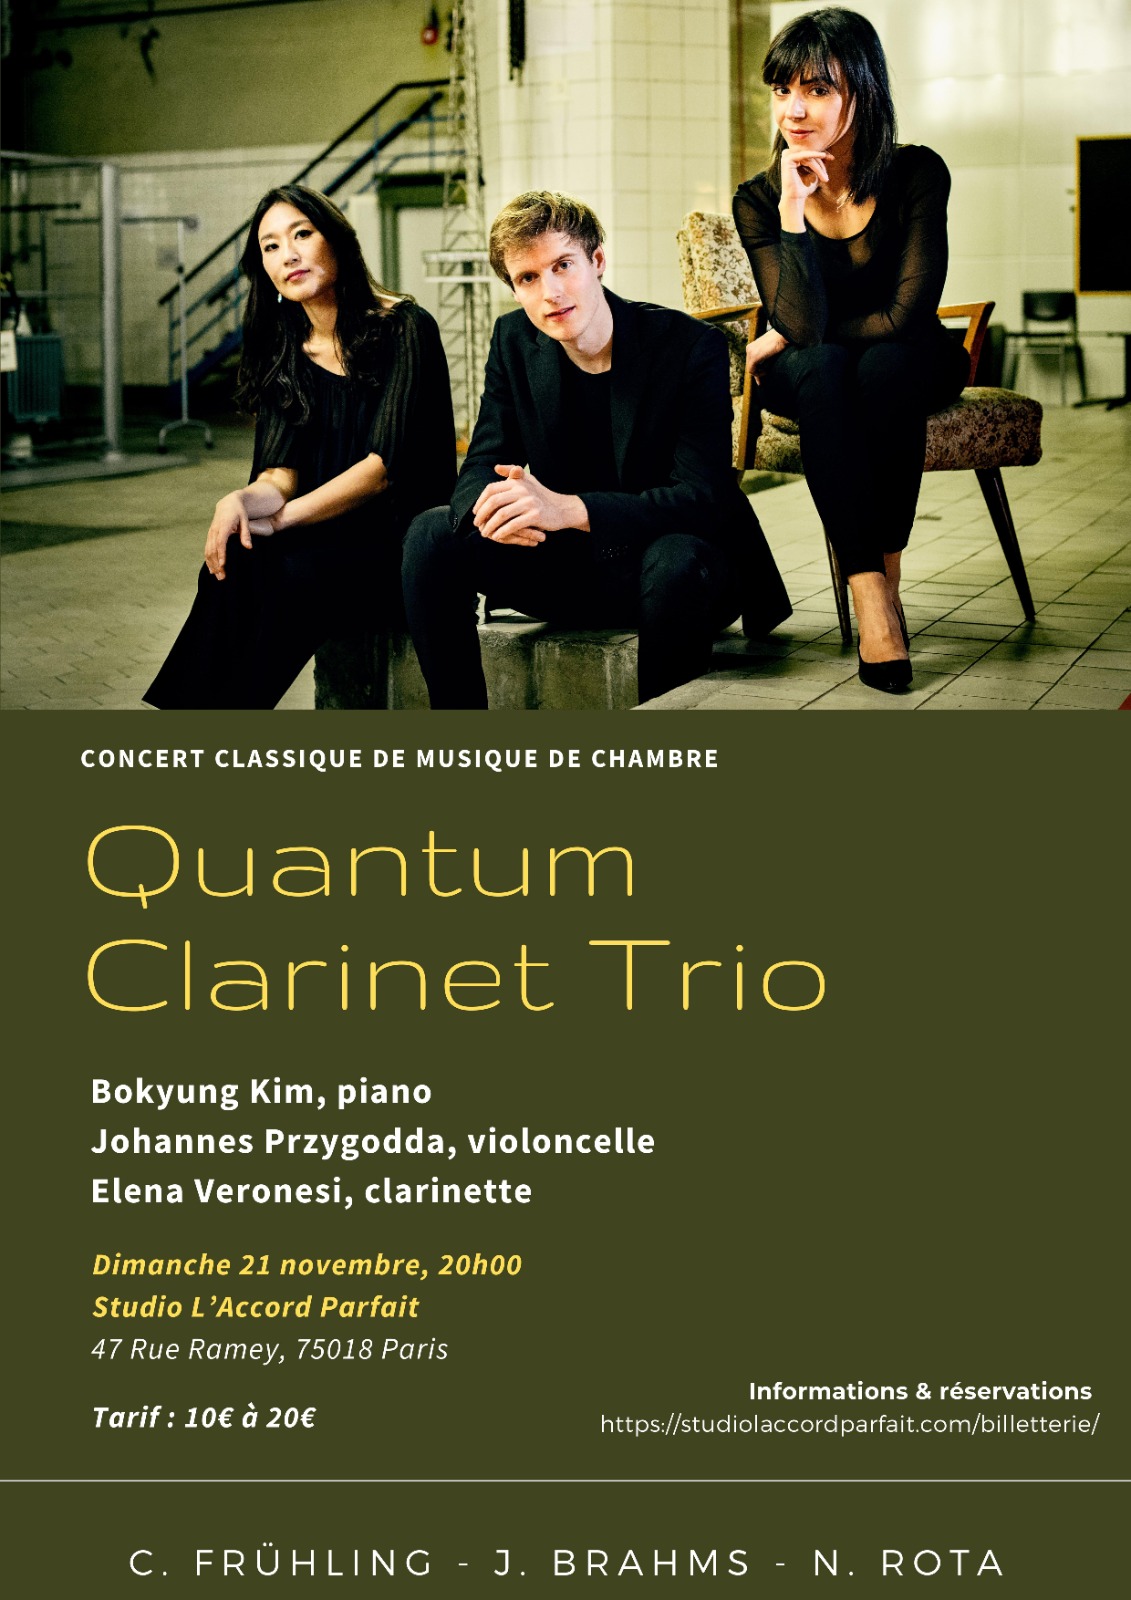 Concert classique de musique de chambre - Quantum Clarinet Trio